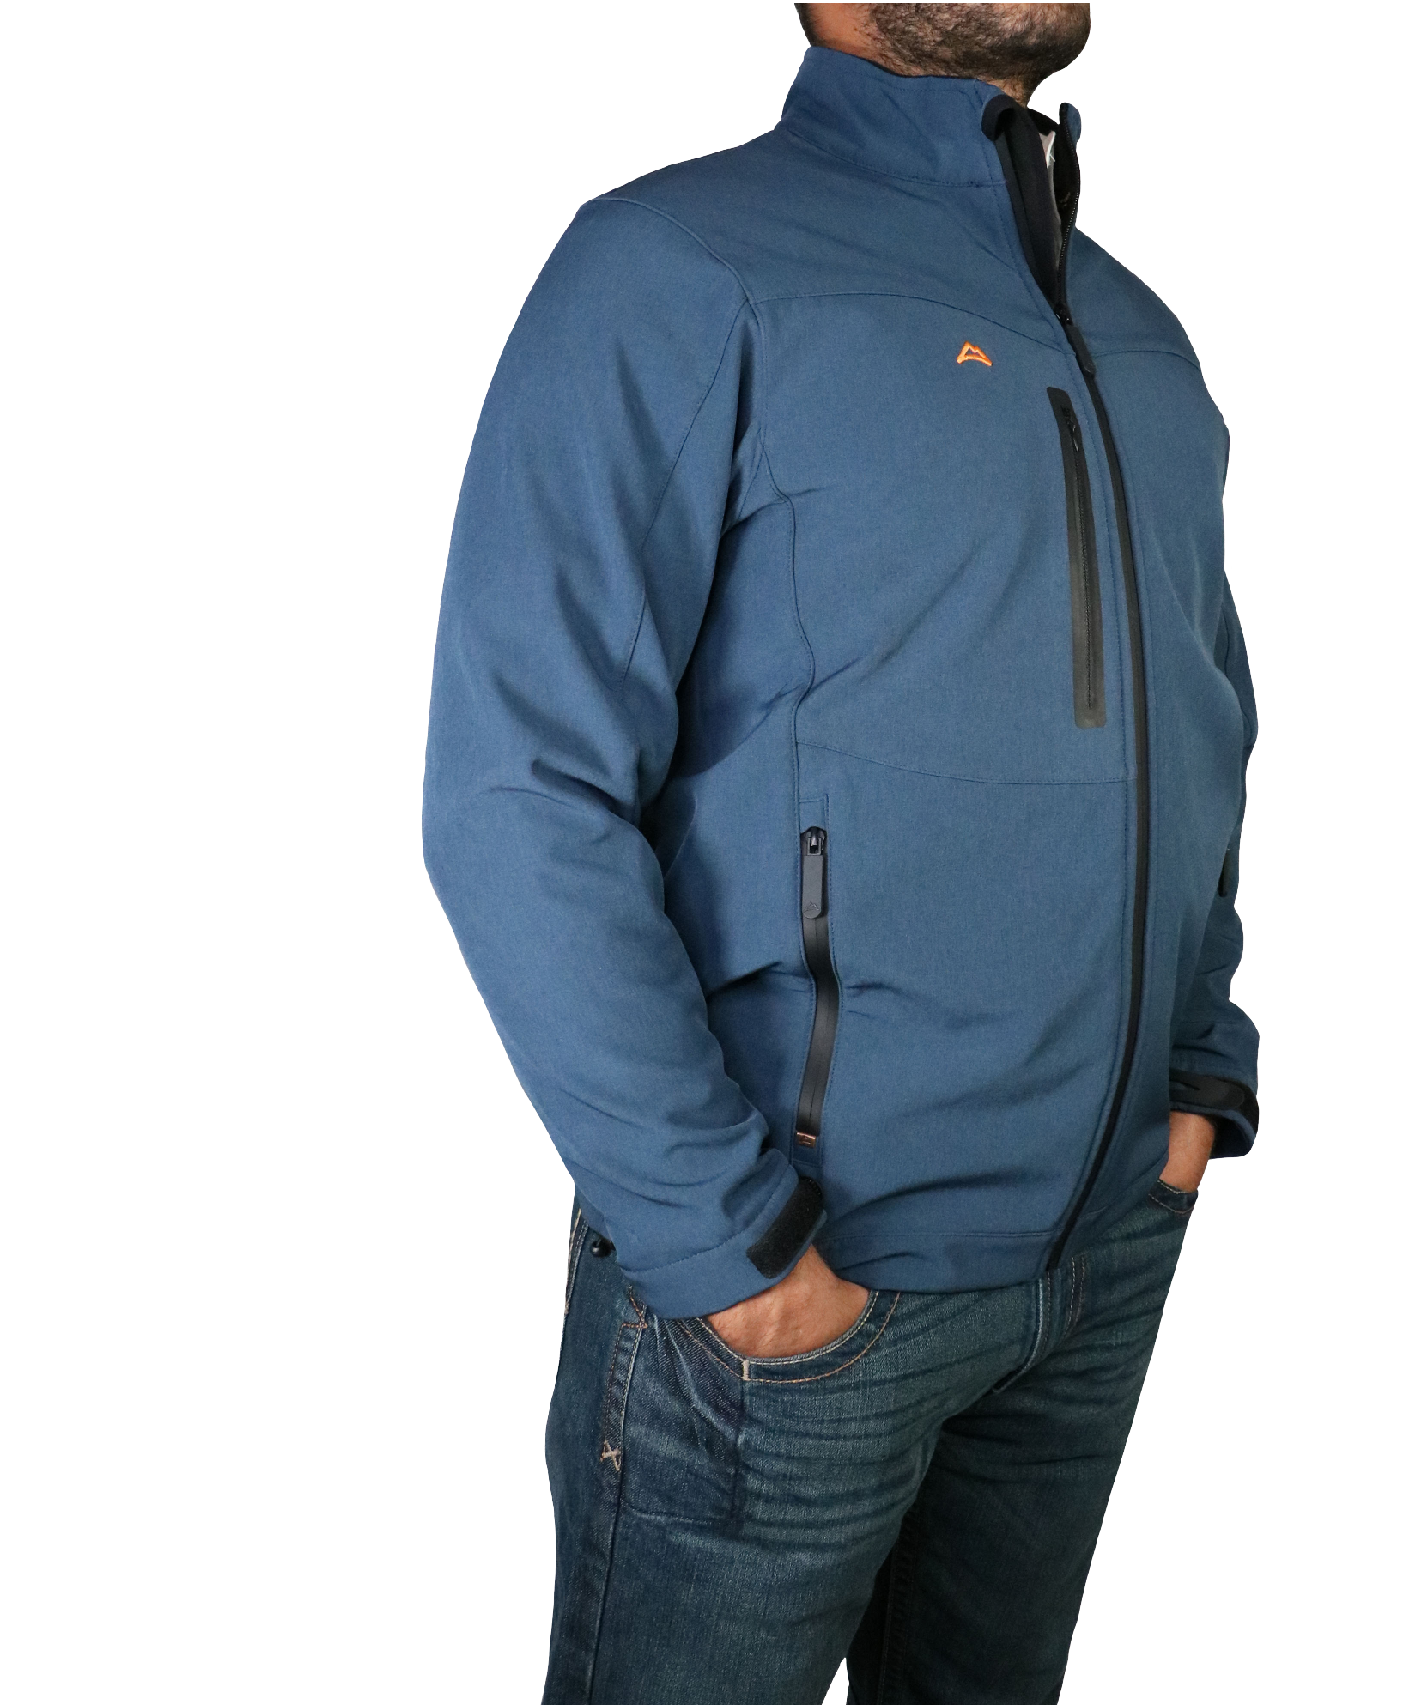 Men's spandex jacket Navy JK1995-ME4